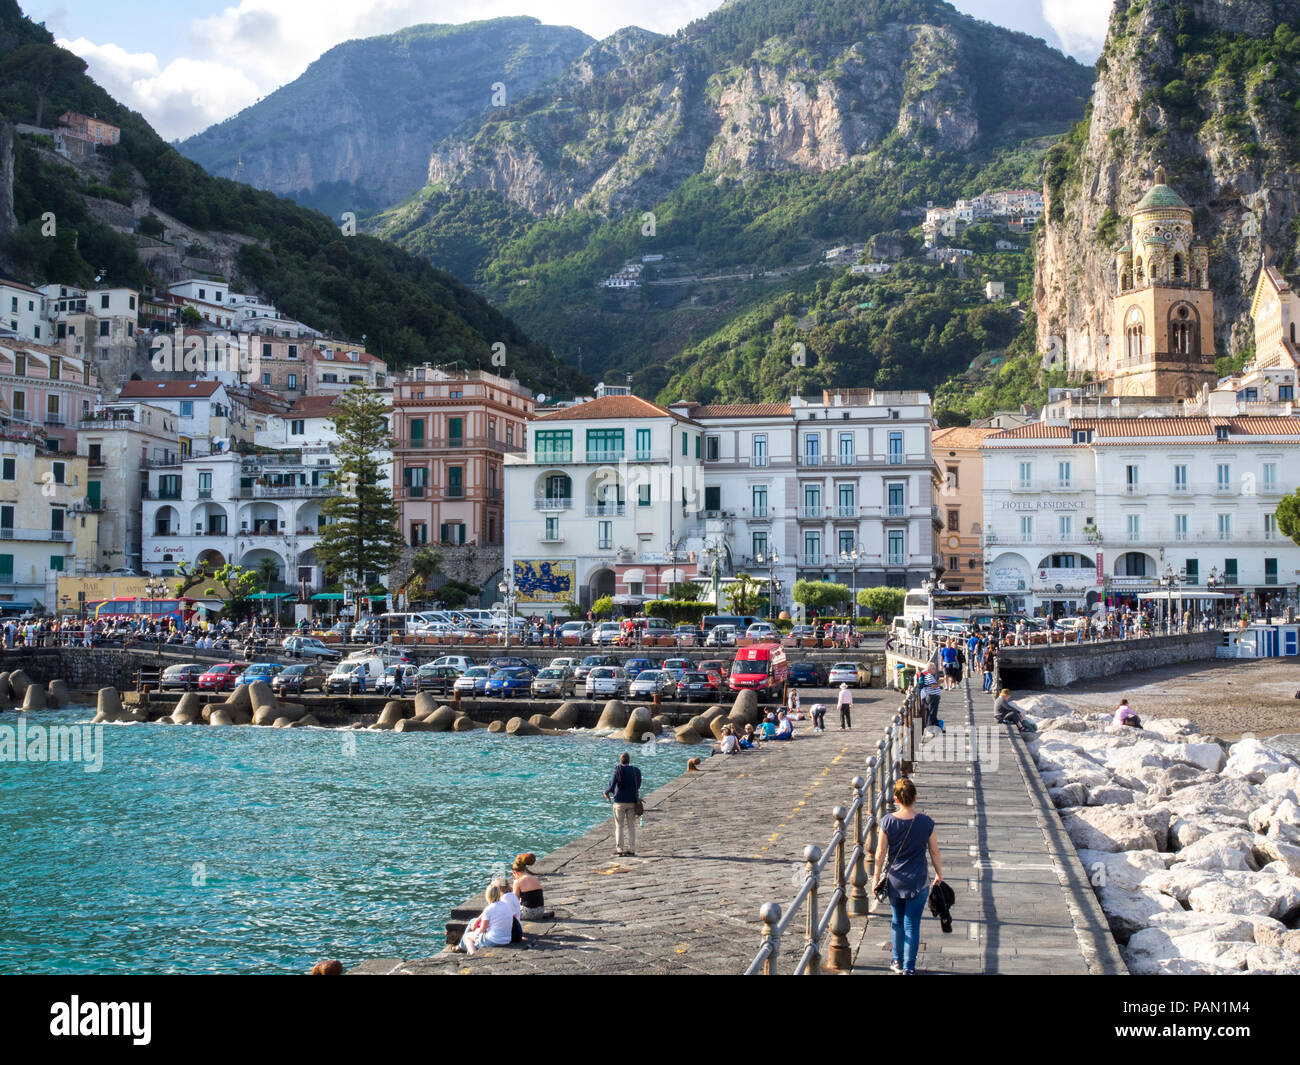 The idyllic village of Amalfi, Italy, as seen from the break water. Stock Photo